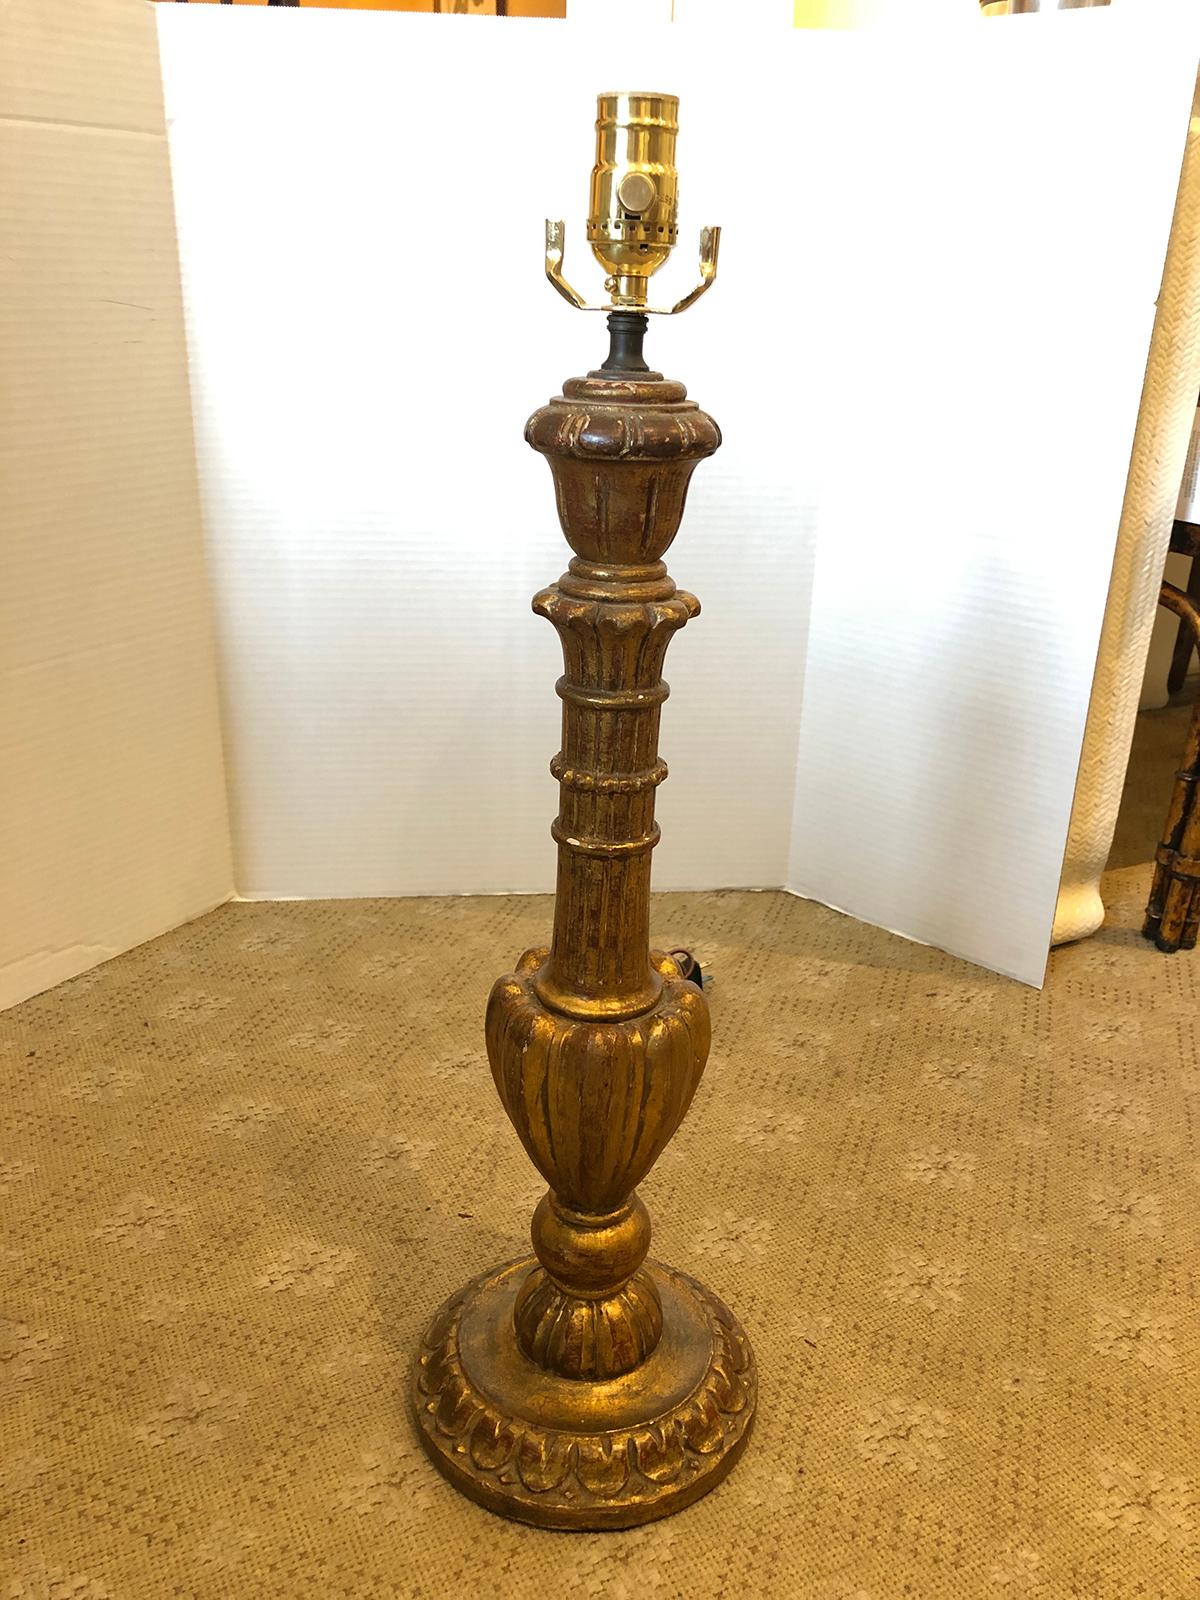 Mid-20th century Italian giltwood lamp.